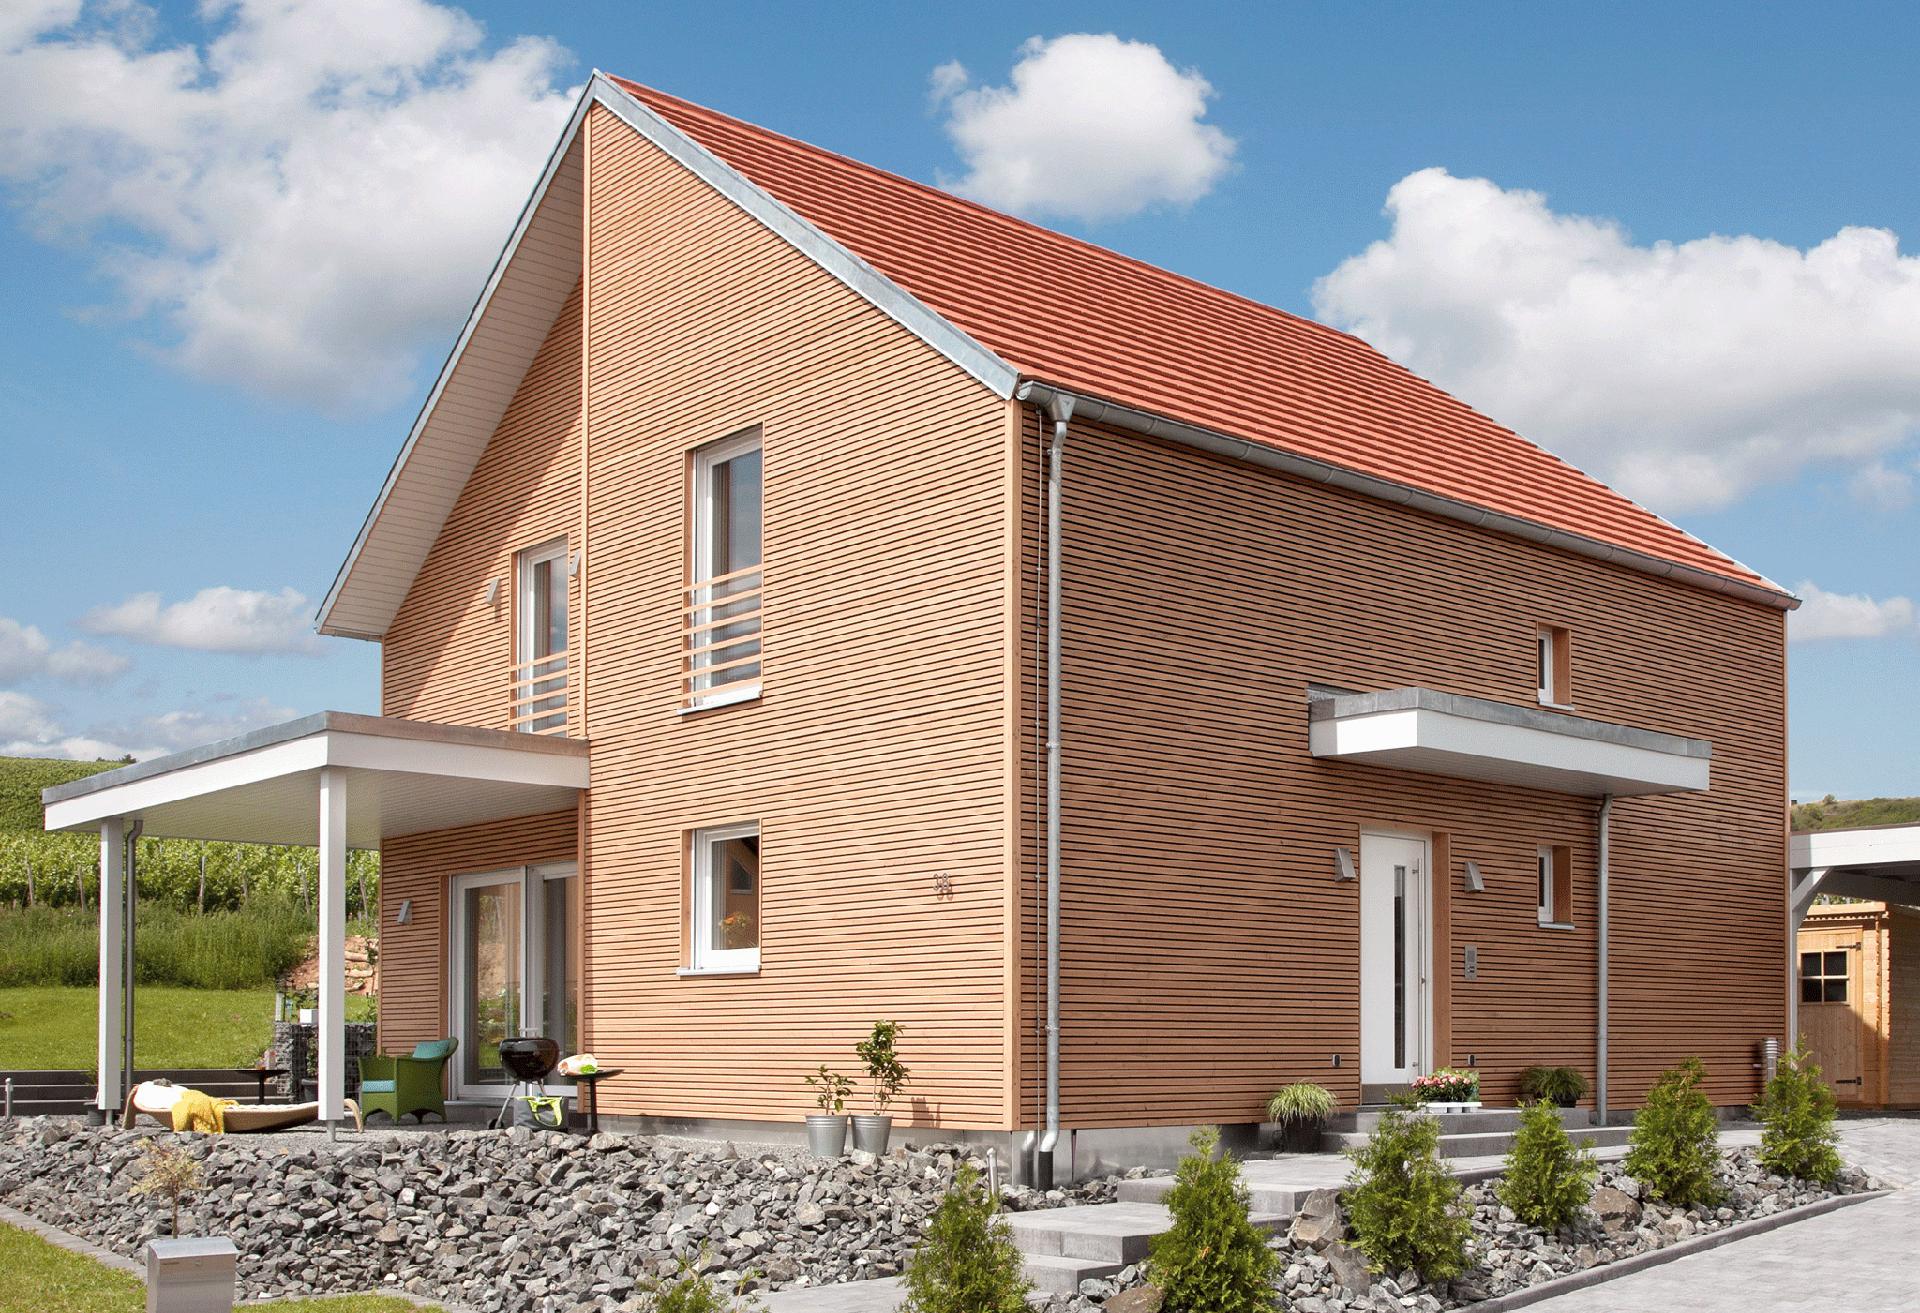 [Translate to Français:] Einfamilienhaus mit Holzfassade im Bauhausstil